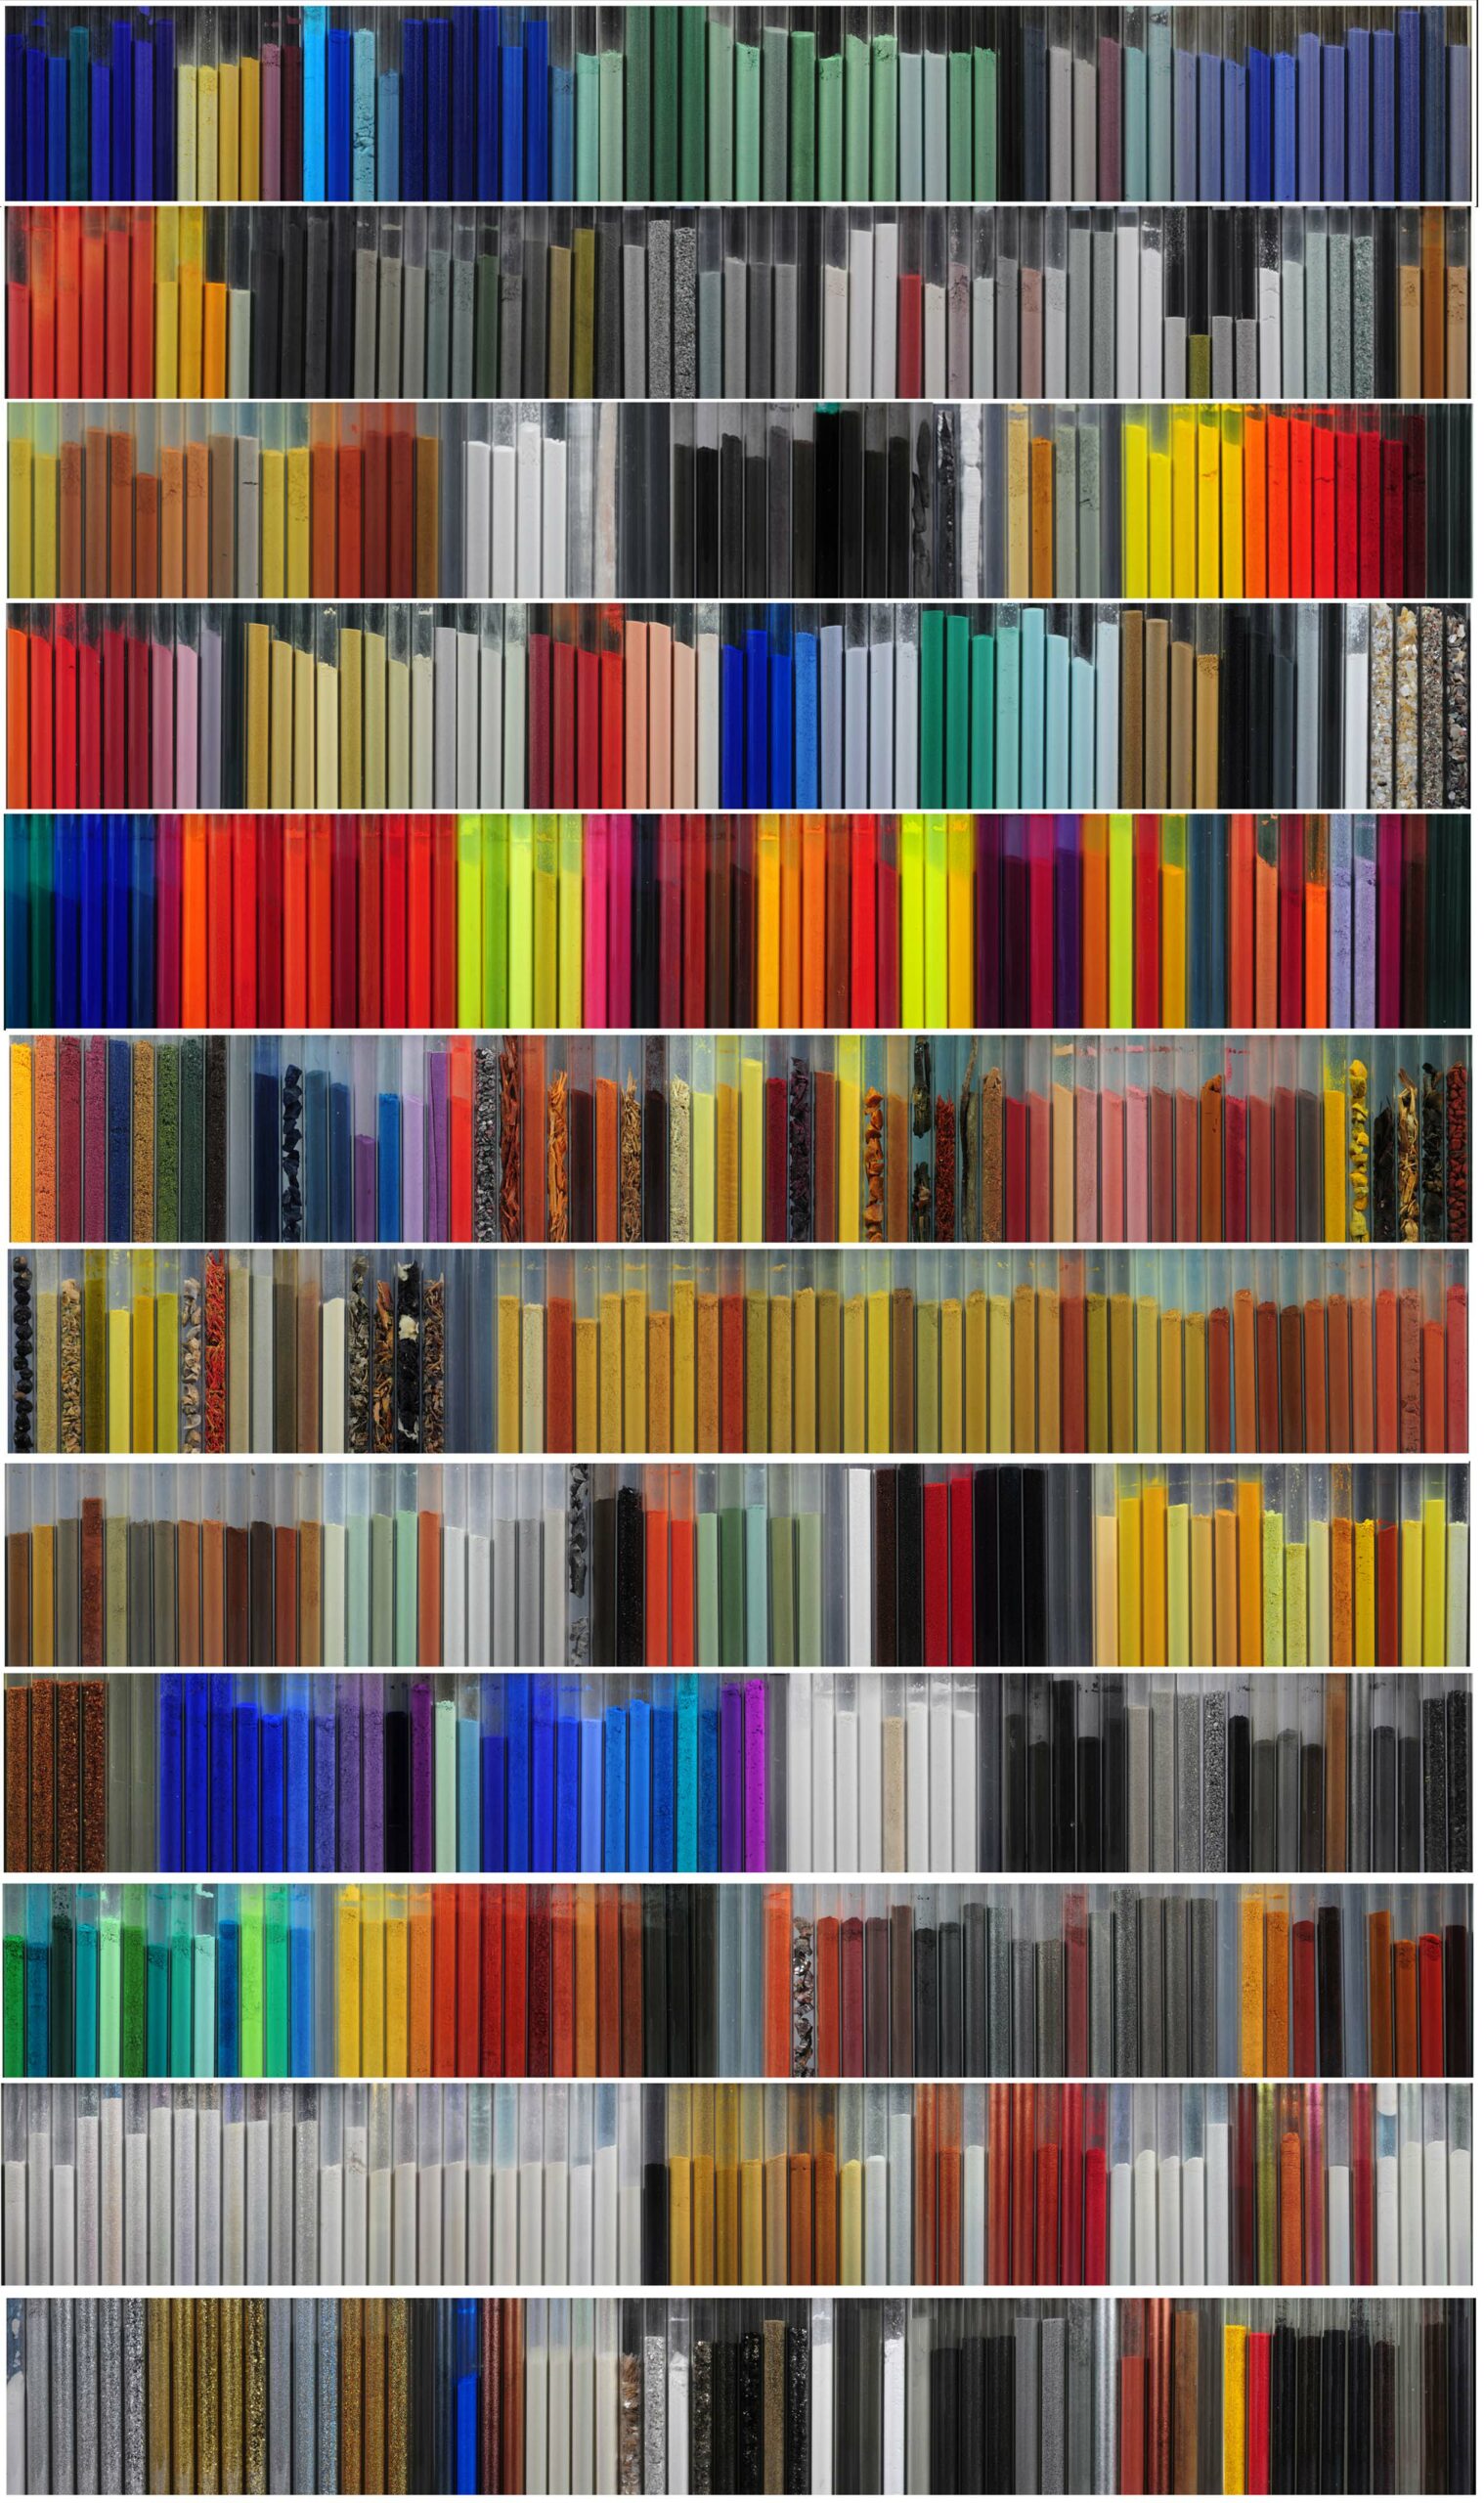 https://freiefarbe.de/wp-content/uploads/2017/04/Pigmentroehrchenwand-scaled.jpg